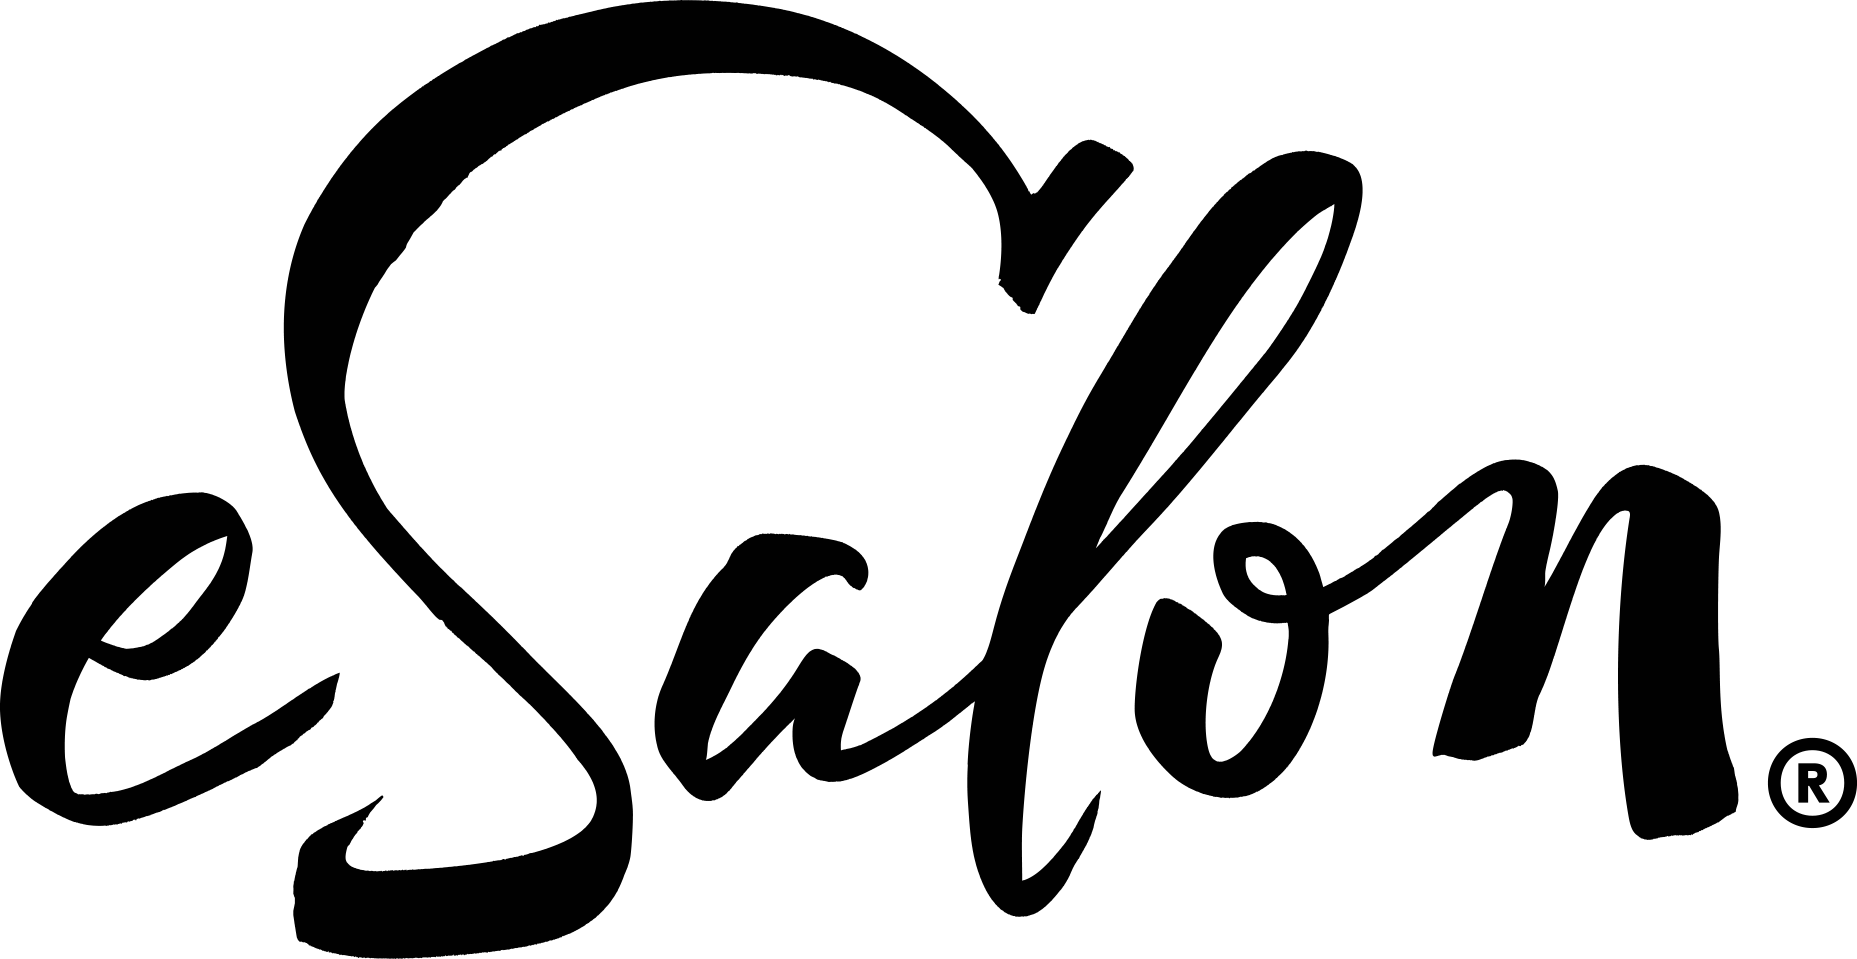 Esalon Logo